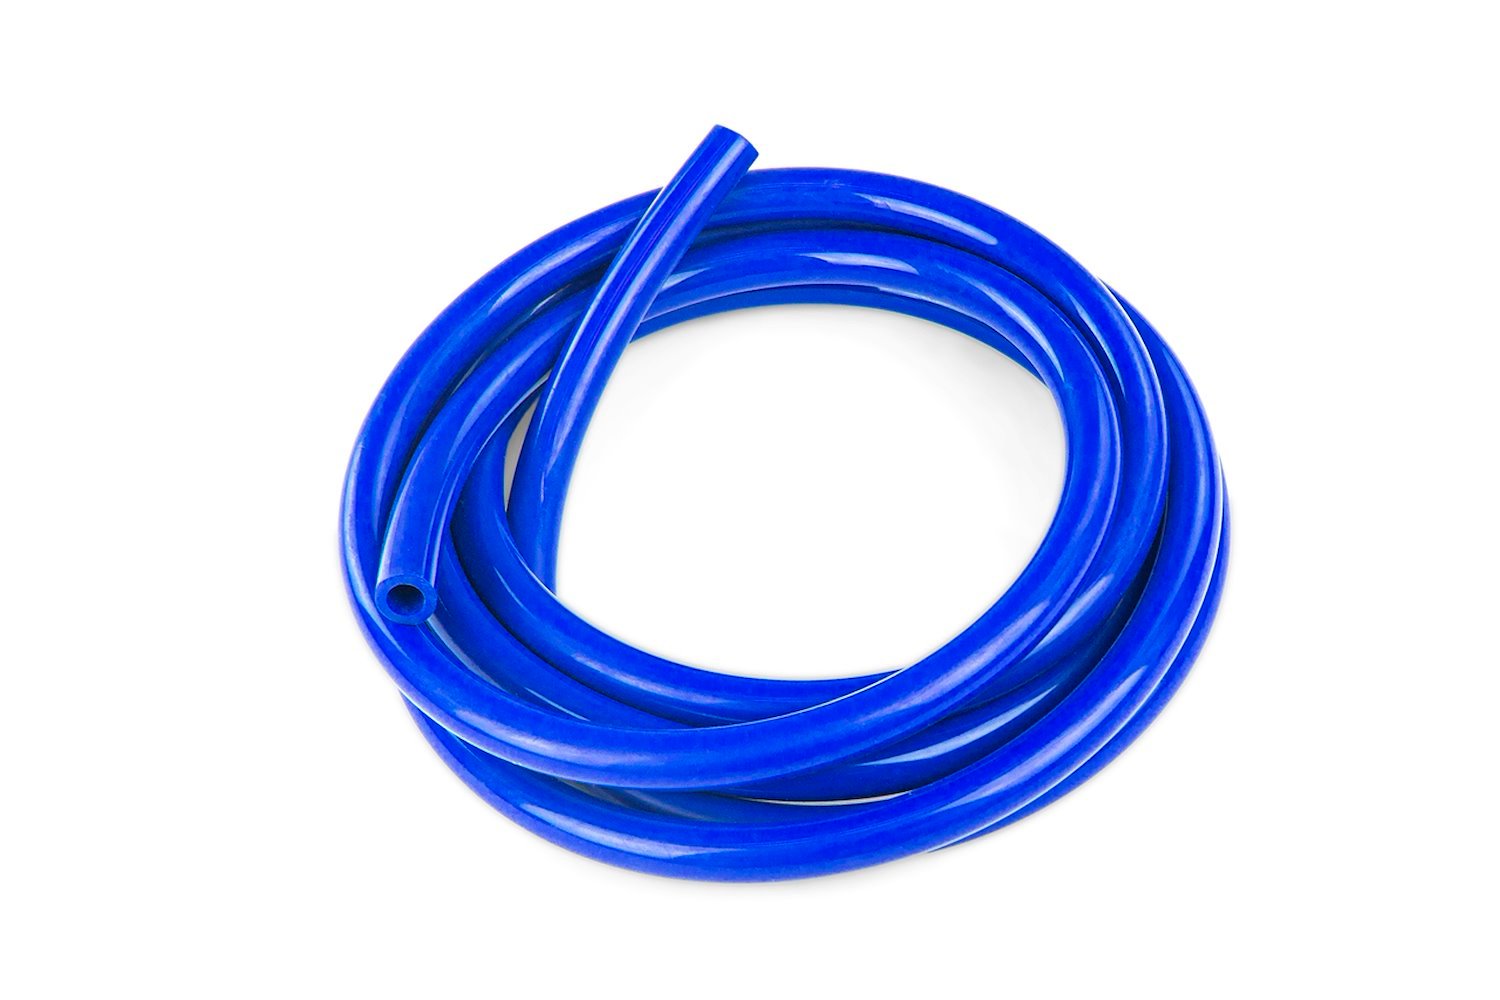 HTSVH3-BLUEx25 High-Temperature Silicone Vacuum Hose Tubing, 1/8 in. ID, 25 ft. Roll, Blue